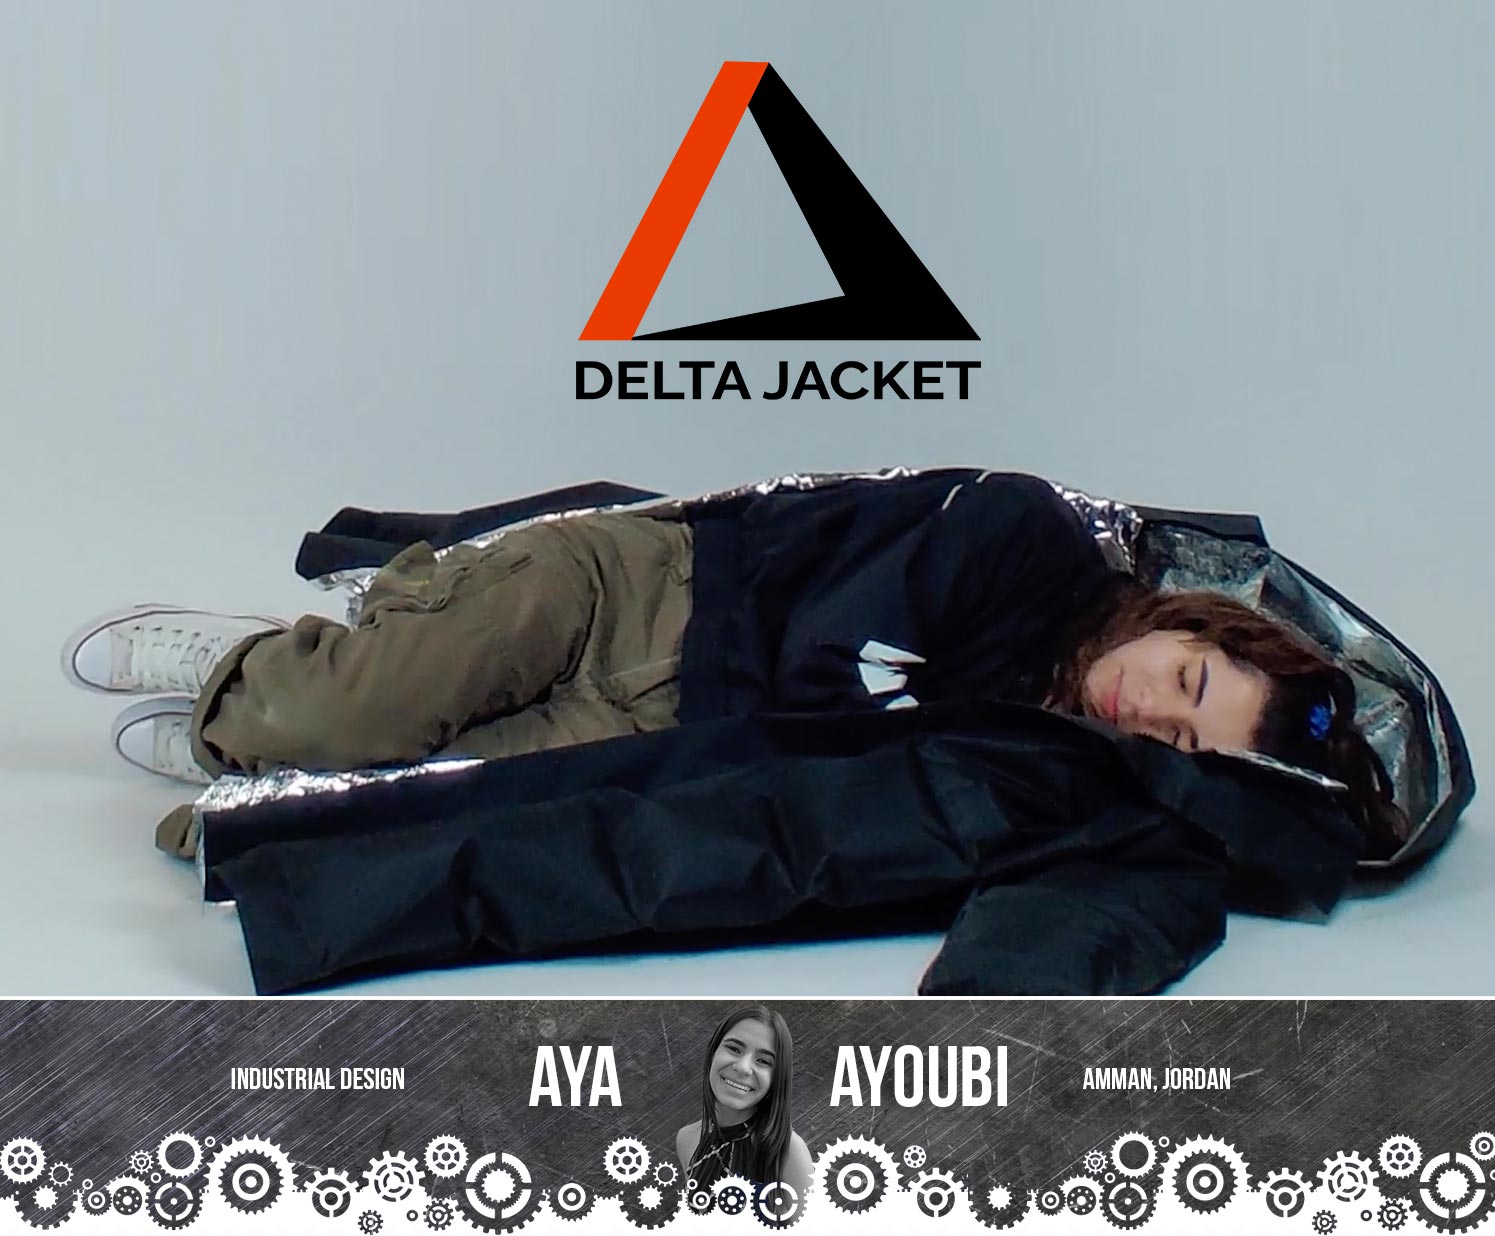 Delta jacket